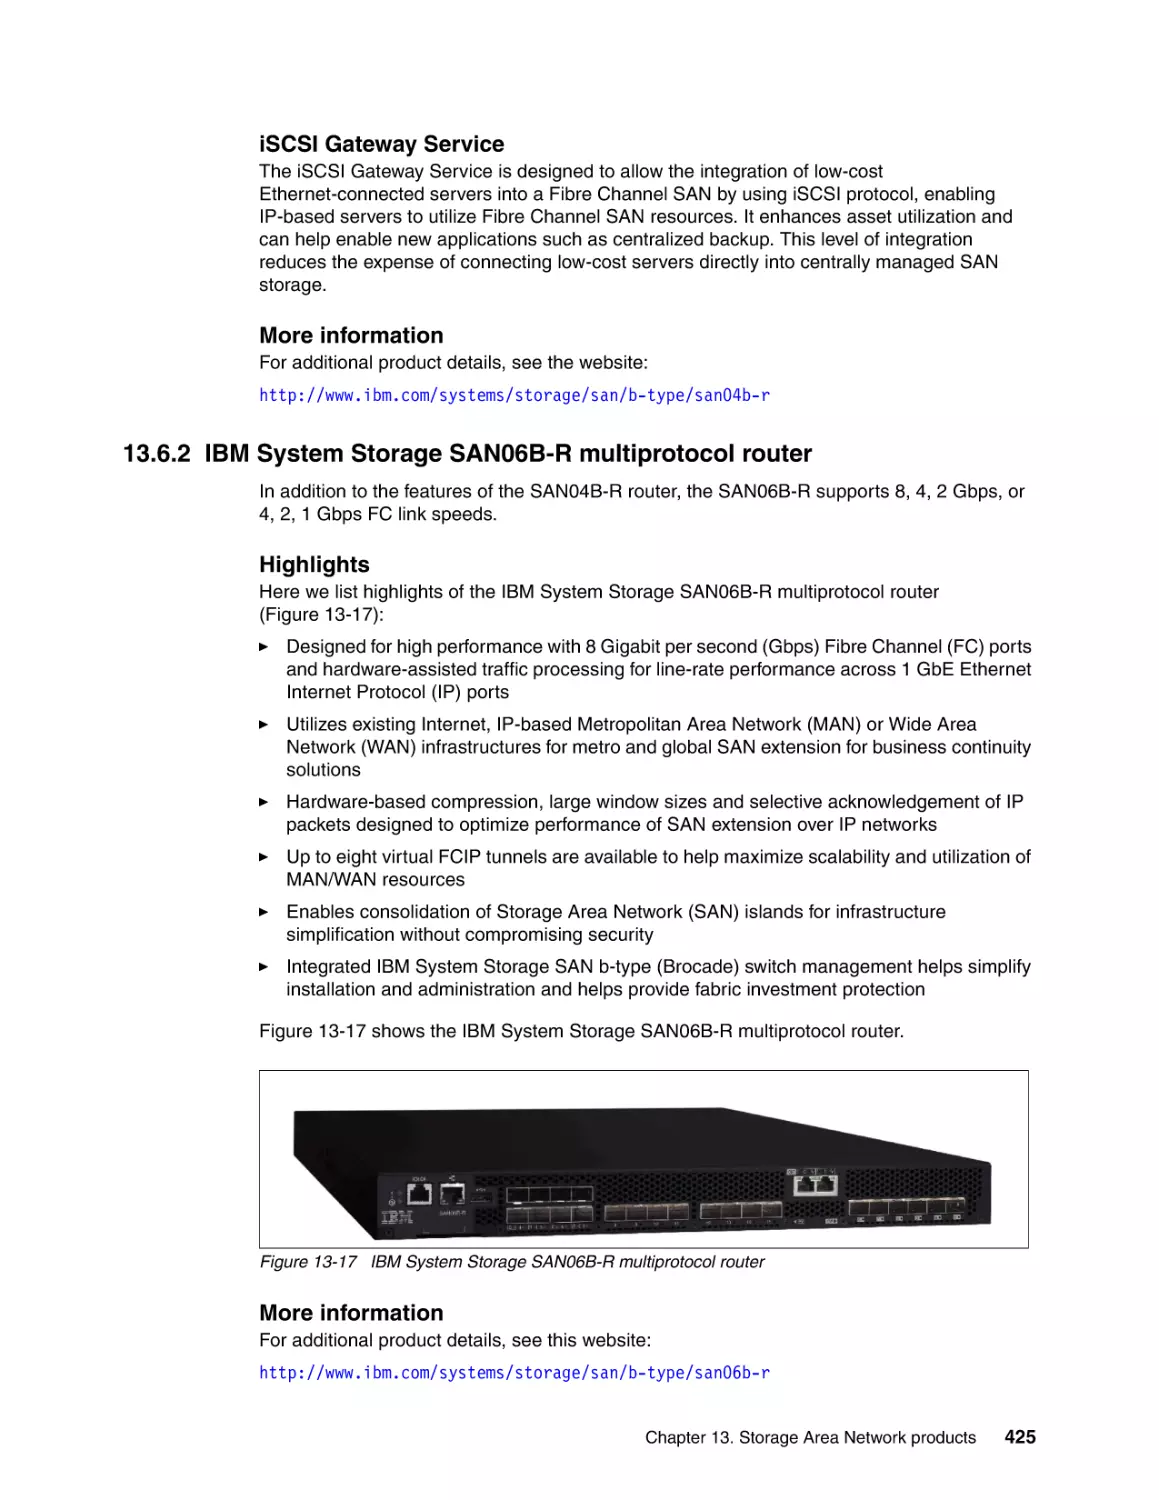 13.6.2 IBM System Storage SAN06B-R multiprotocol router